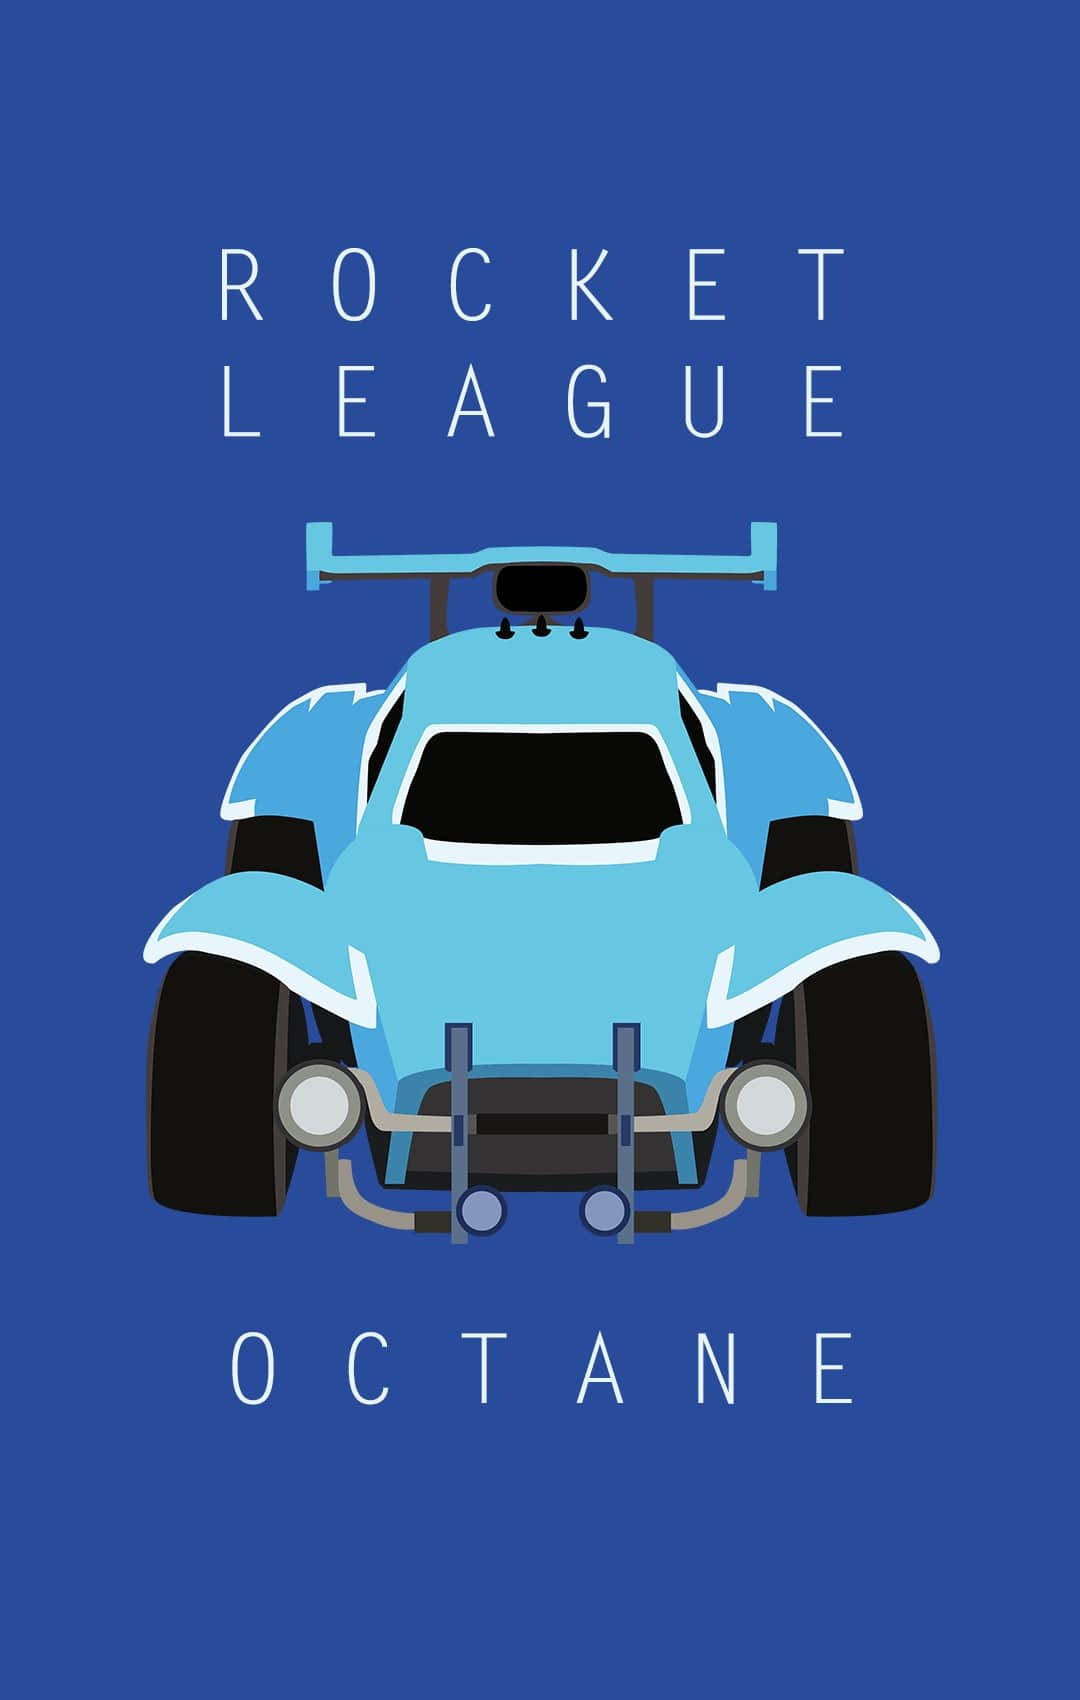 Cool Rocket League Octane Car Background